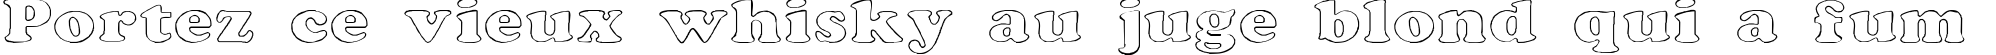 Пример написания шрифтом Rockletter Transparent текста на французском